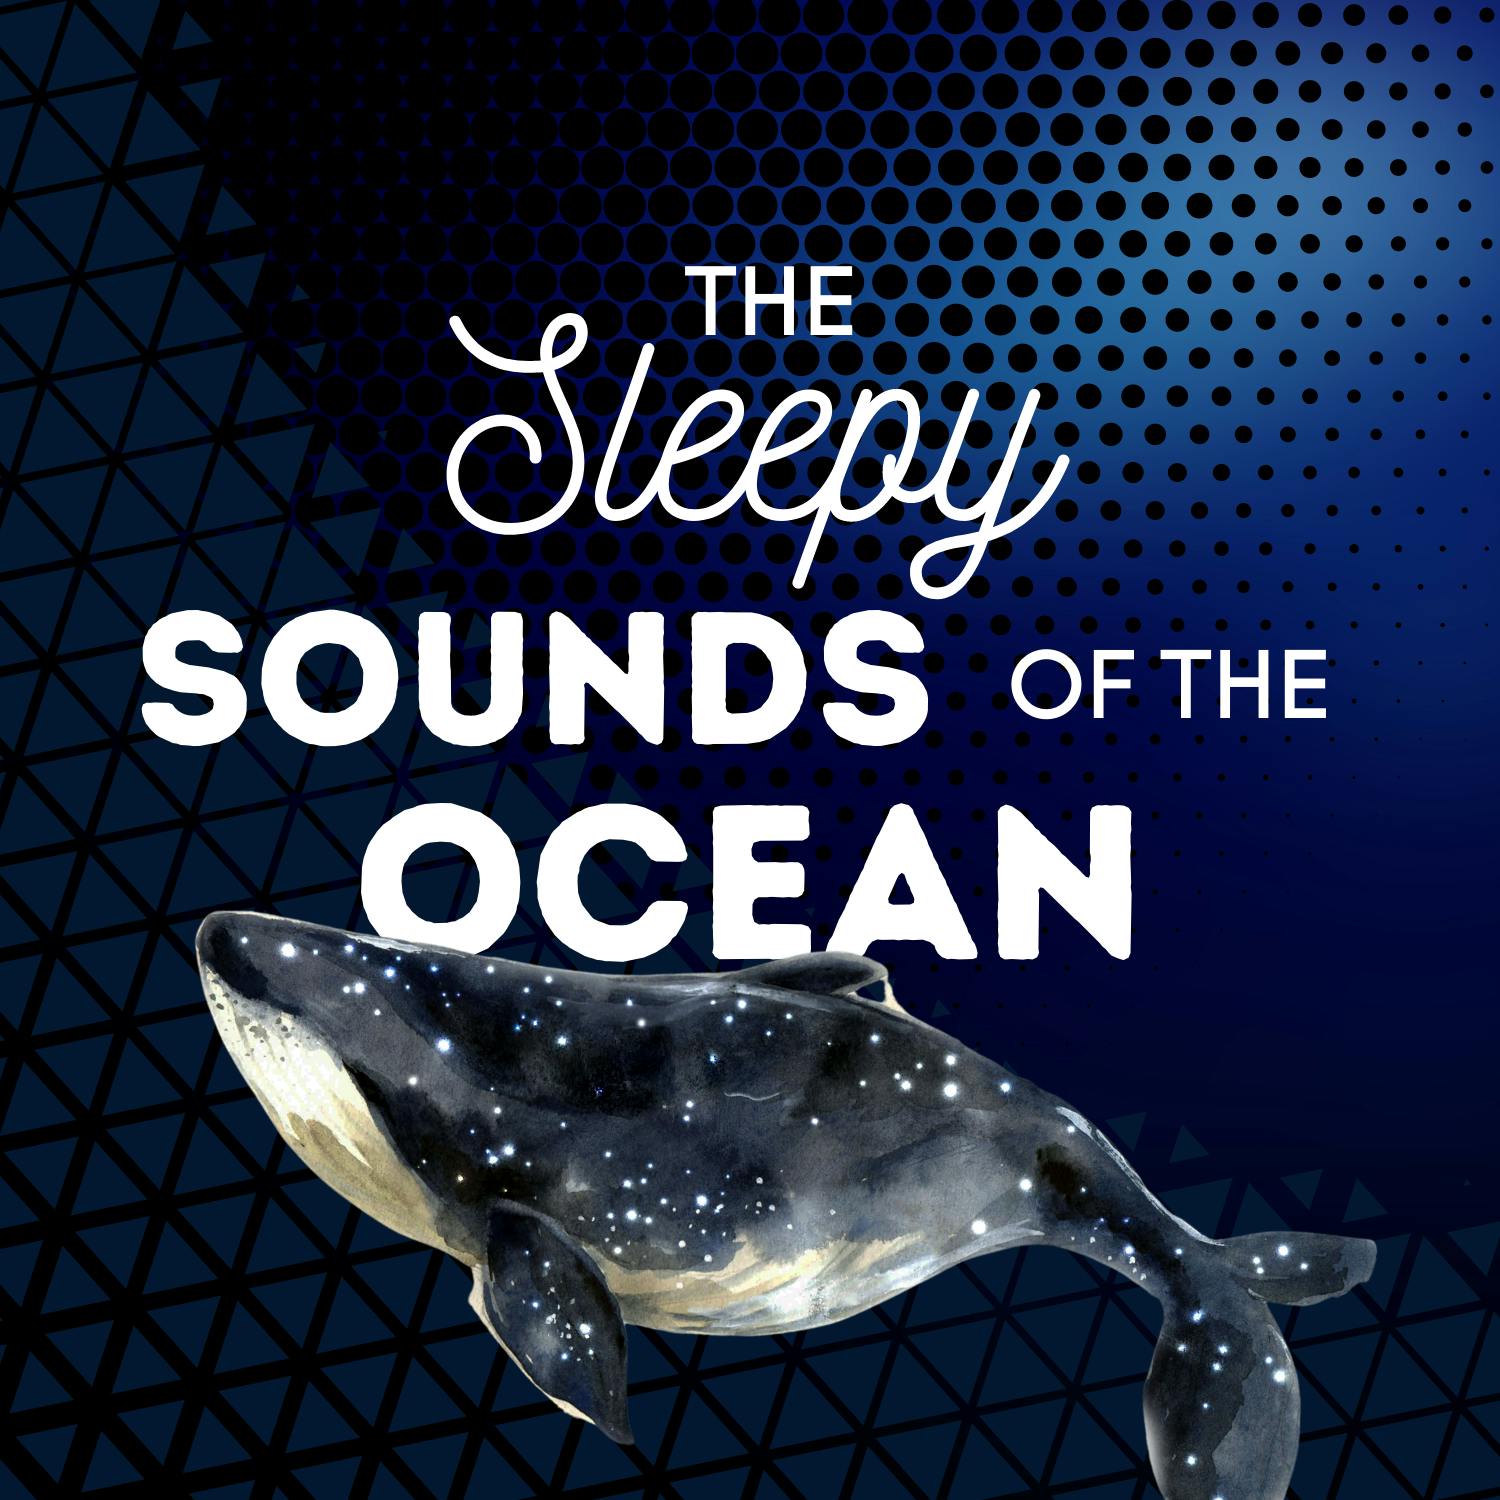 The Sleepy Sounds of the Ocean